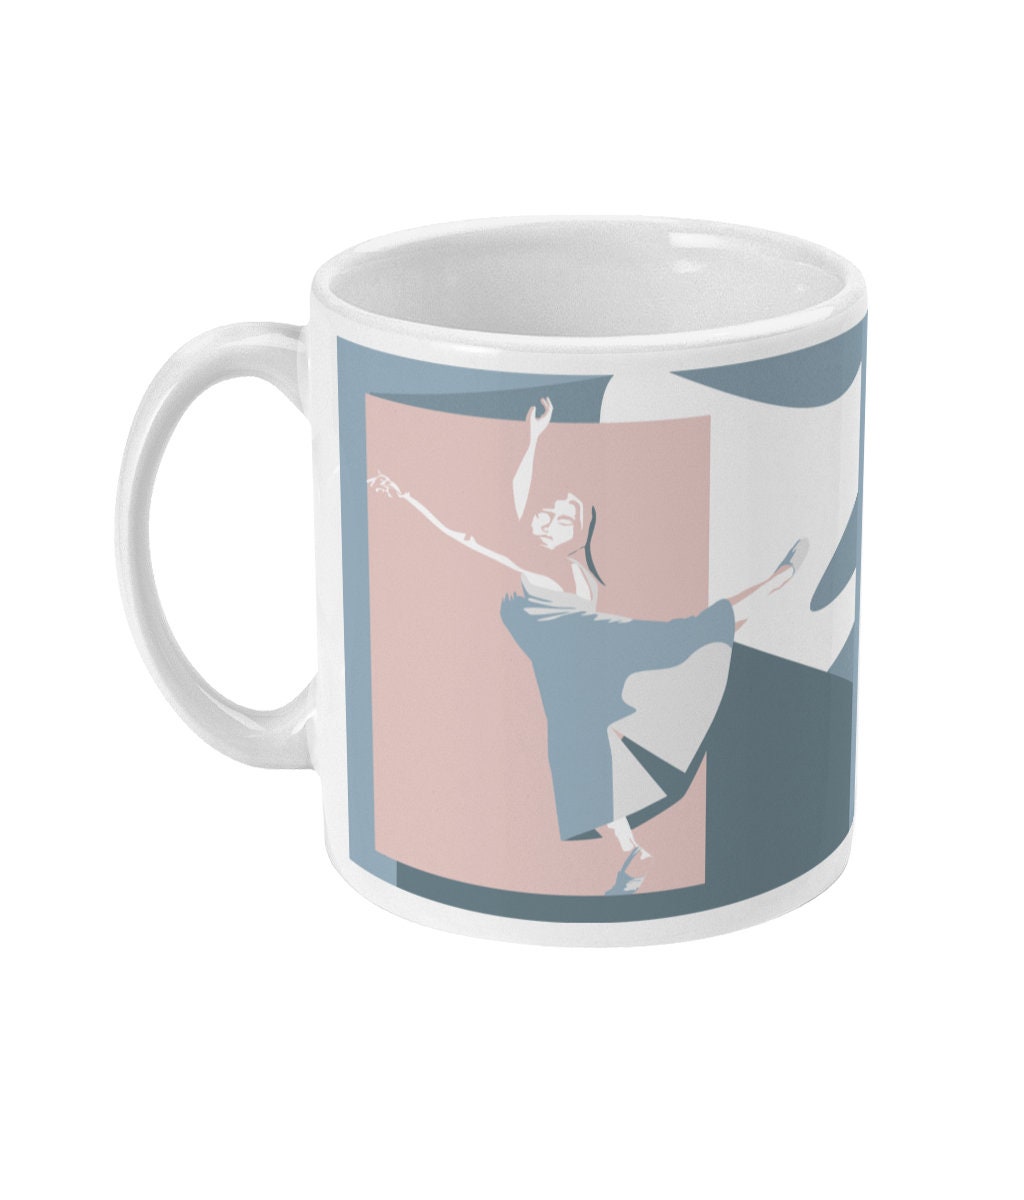 Cup or mug "Contemporary dance" - Customizable